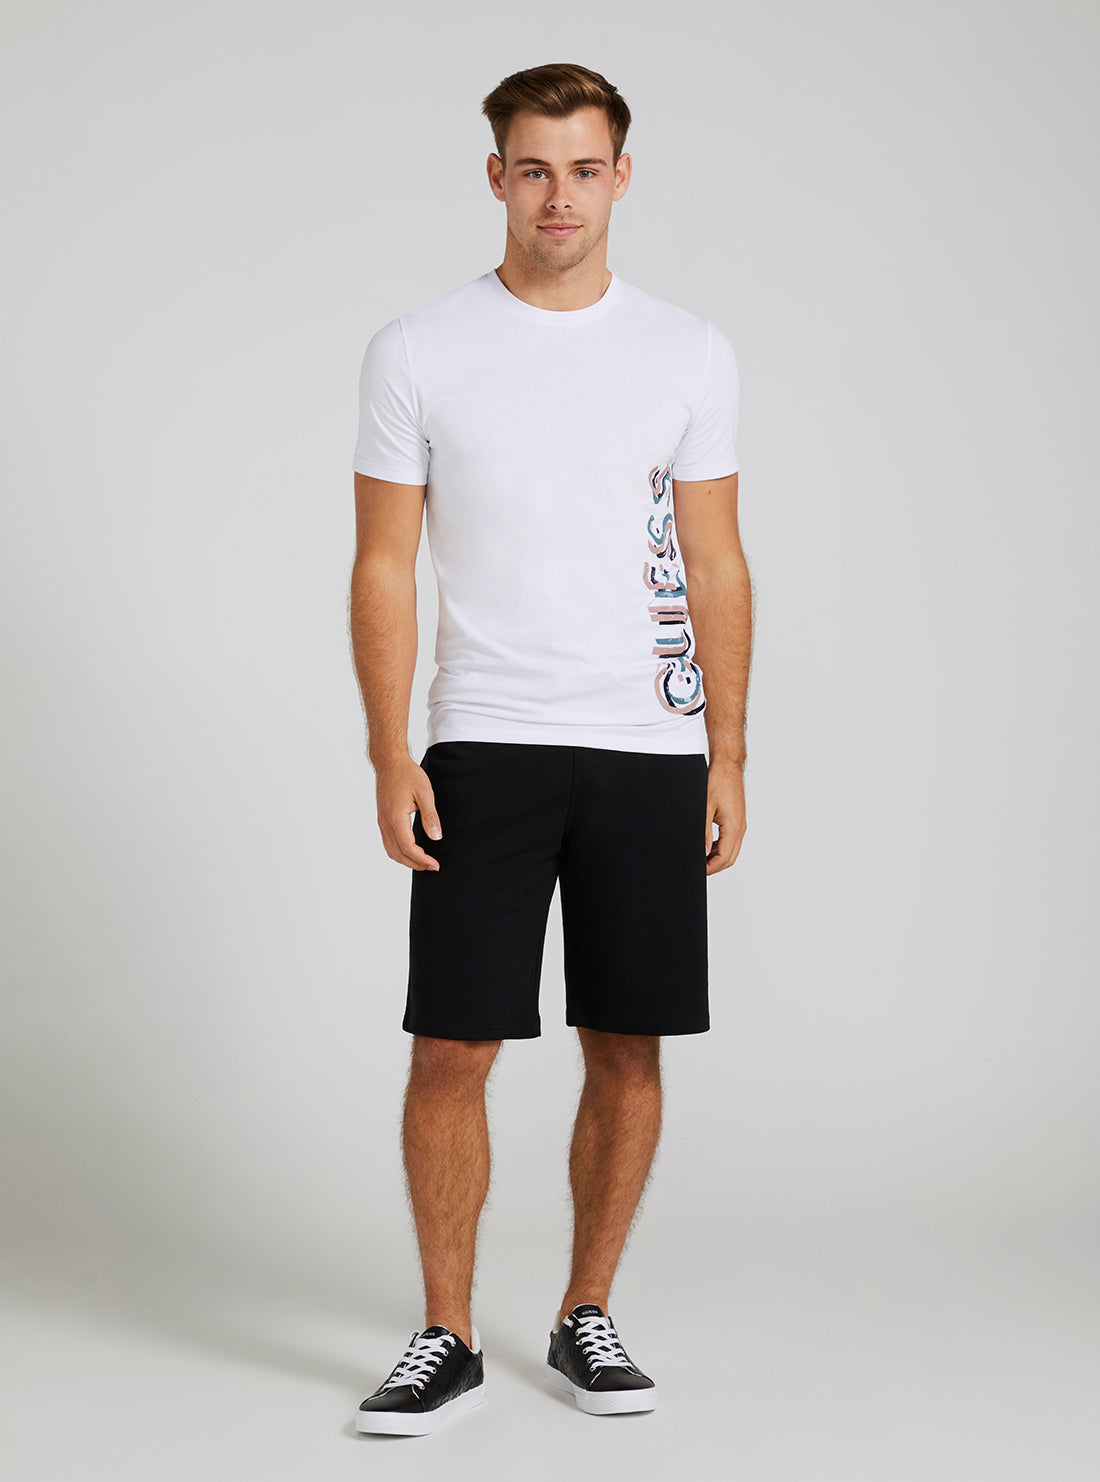 GUESS Men's Eco White Vertical Logo T-Shirt M3GI22J1314 Full View